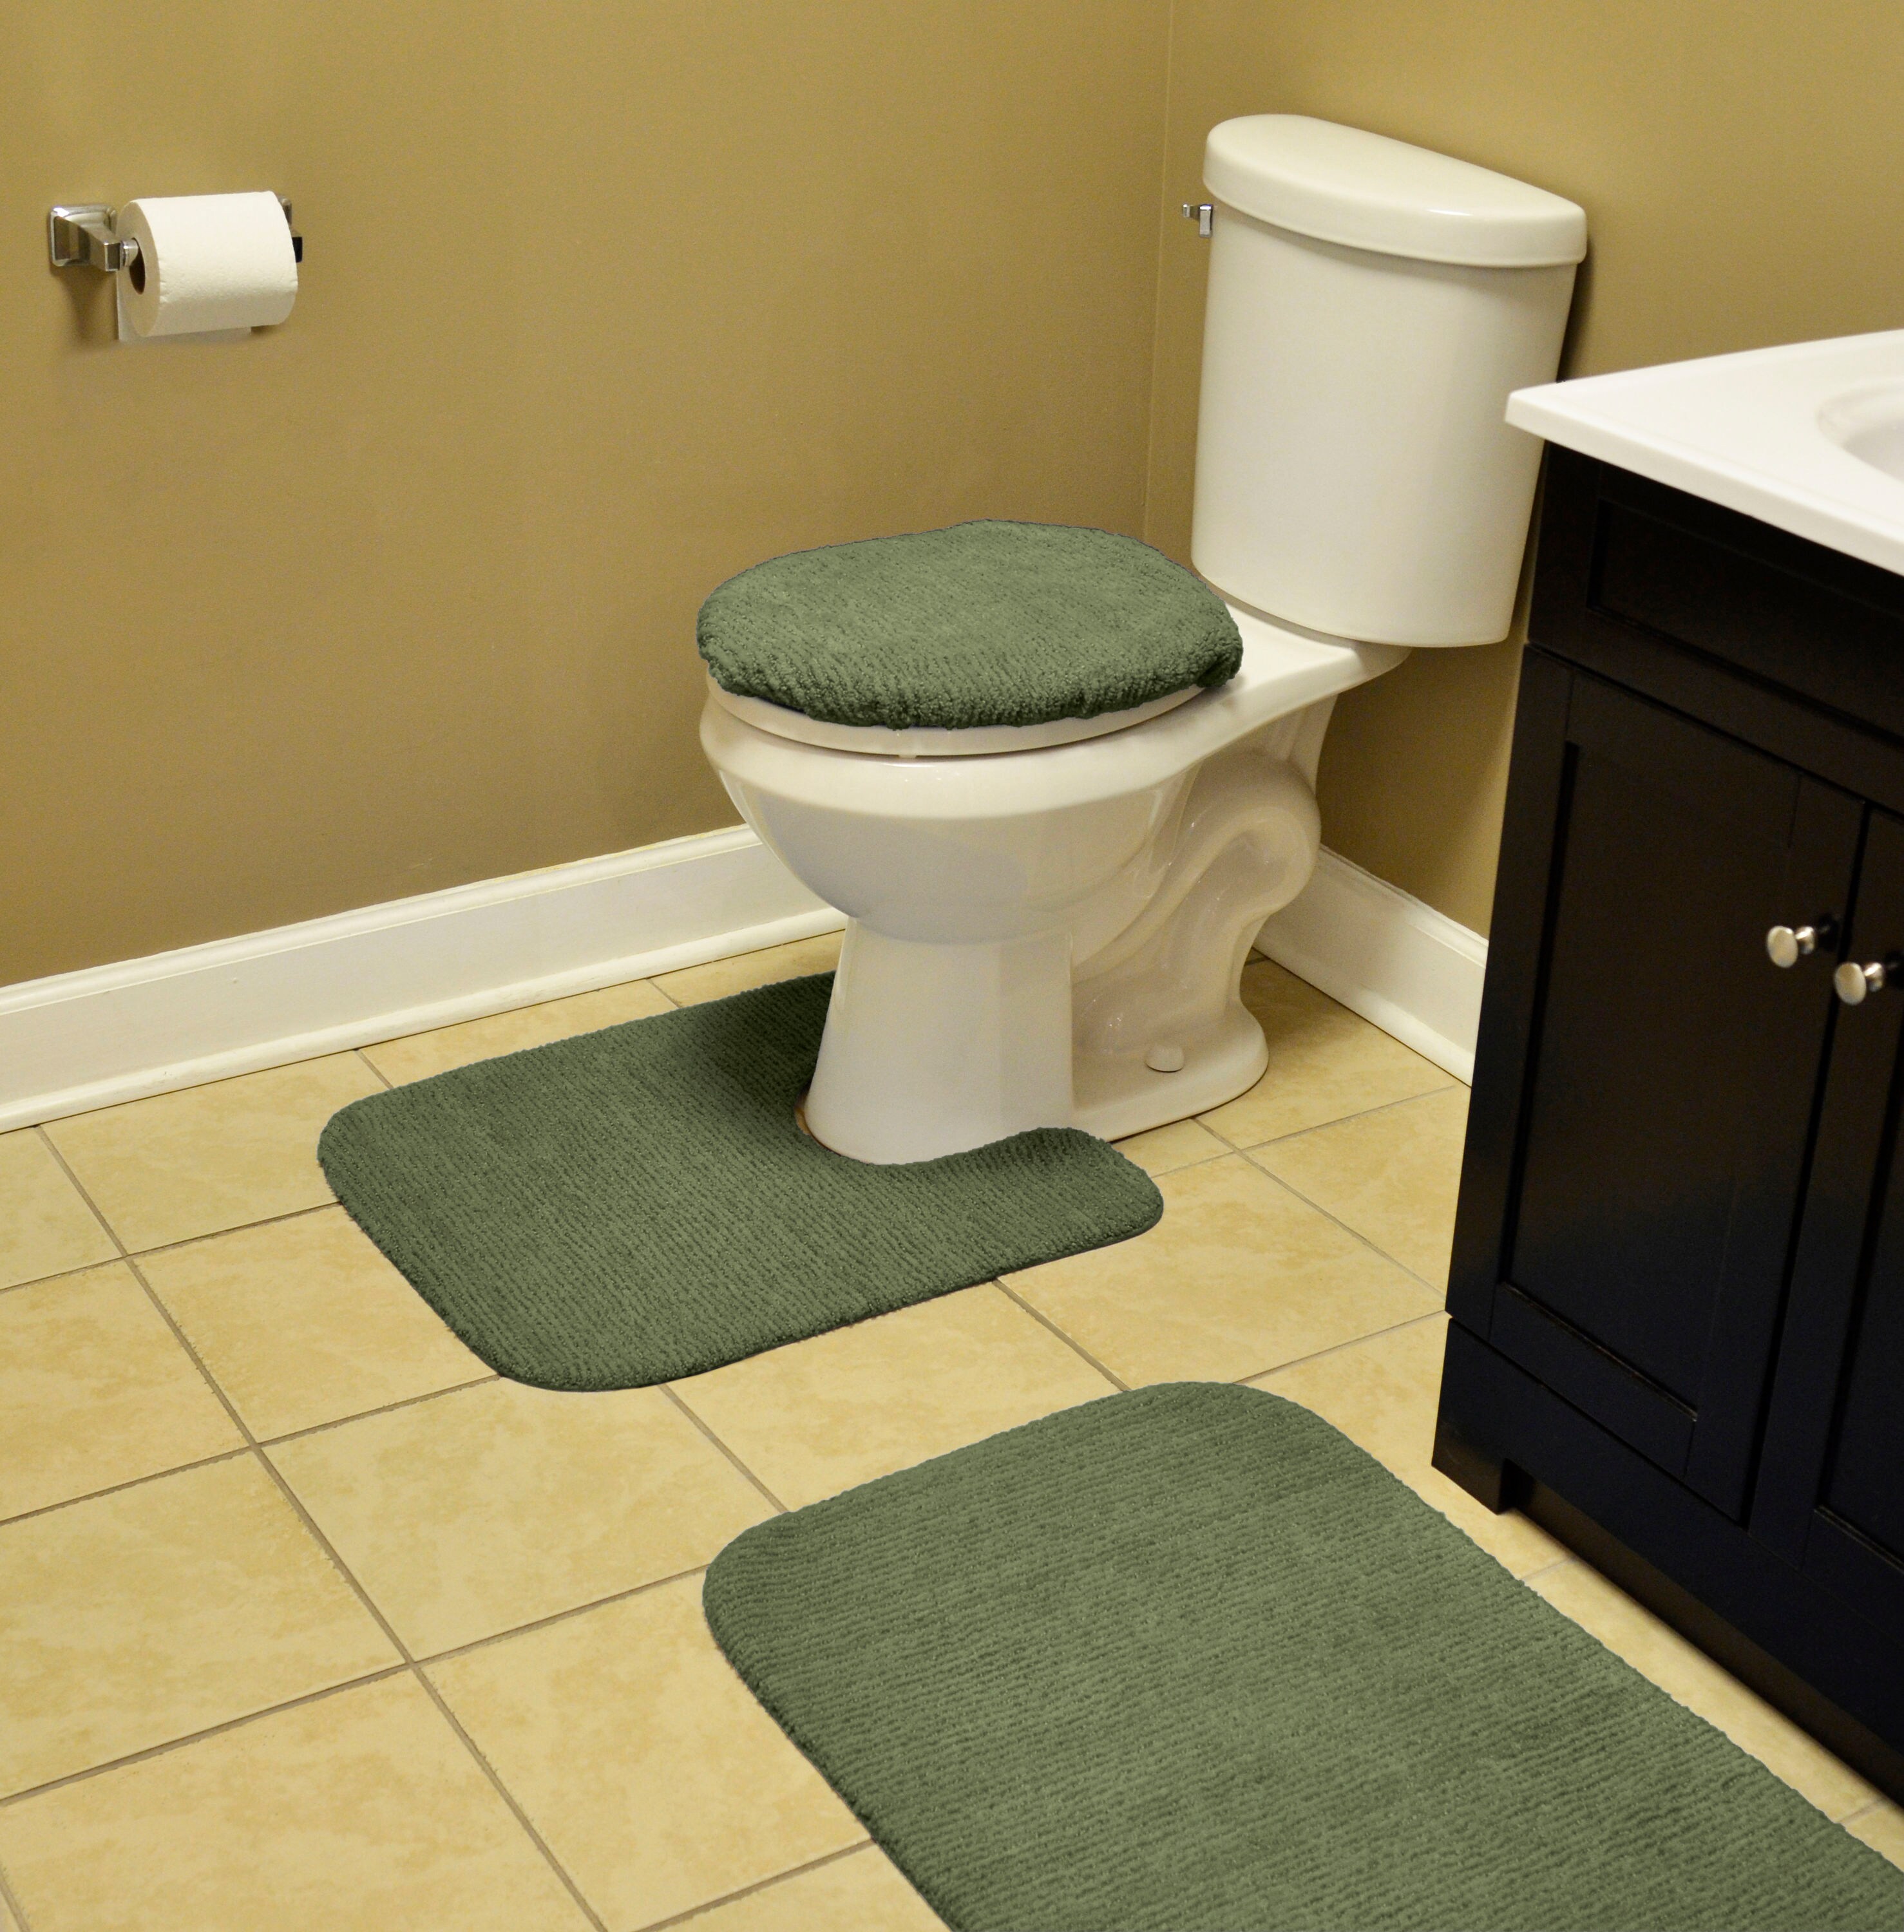 Grey Gray Plush Toilet Top Lid Cover Rug Bathroom Accessory Comforel Nylon NEW 